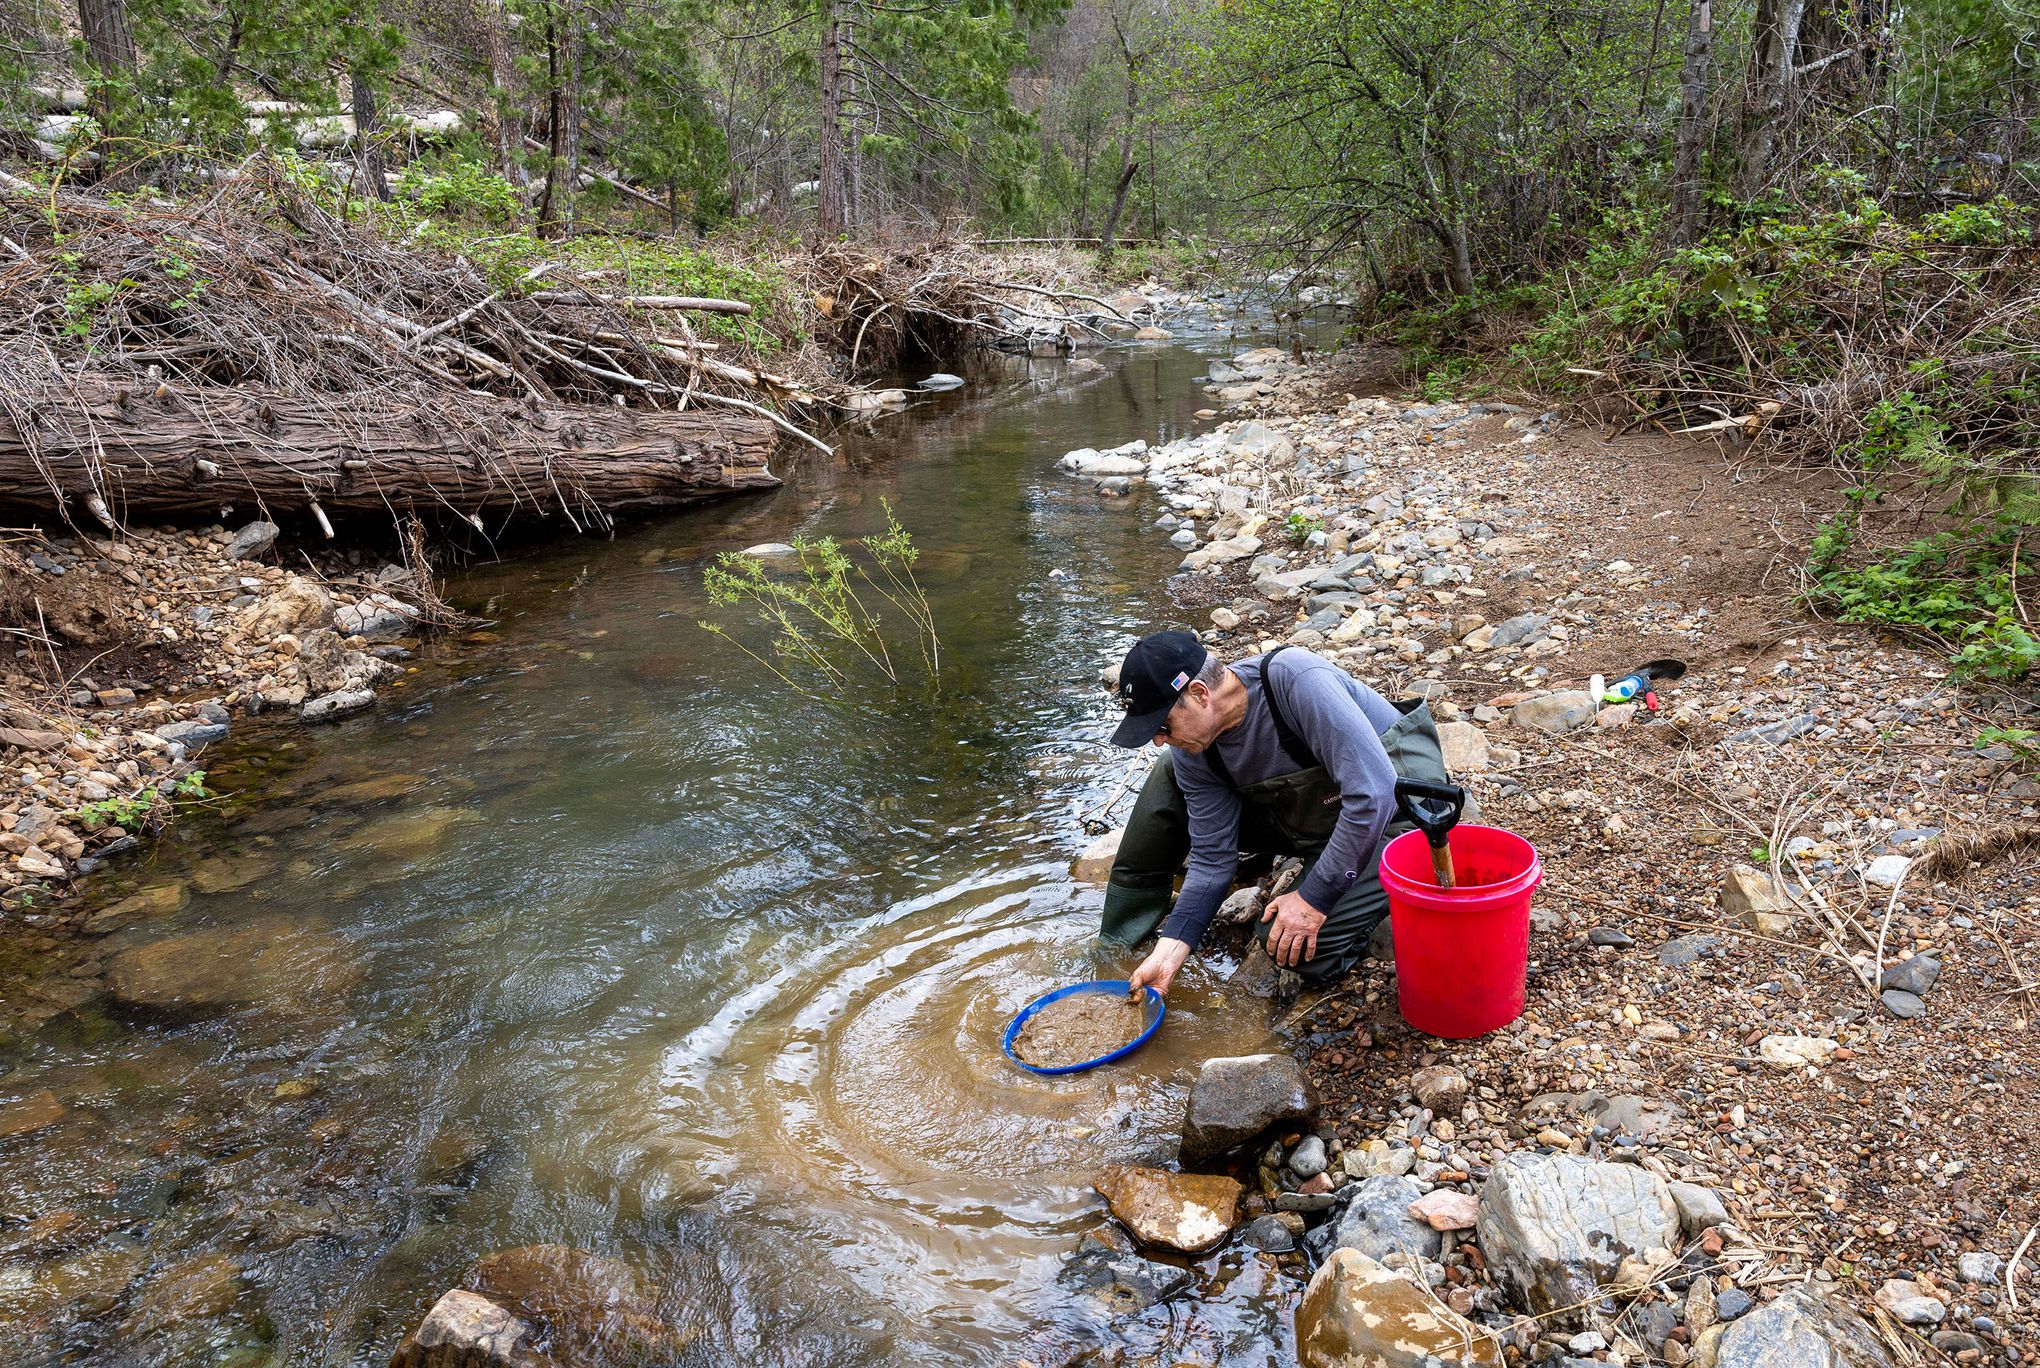 Modern-day prospectors take notice as raging California rivers replenish  historic Gold Rush spots